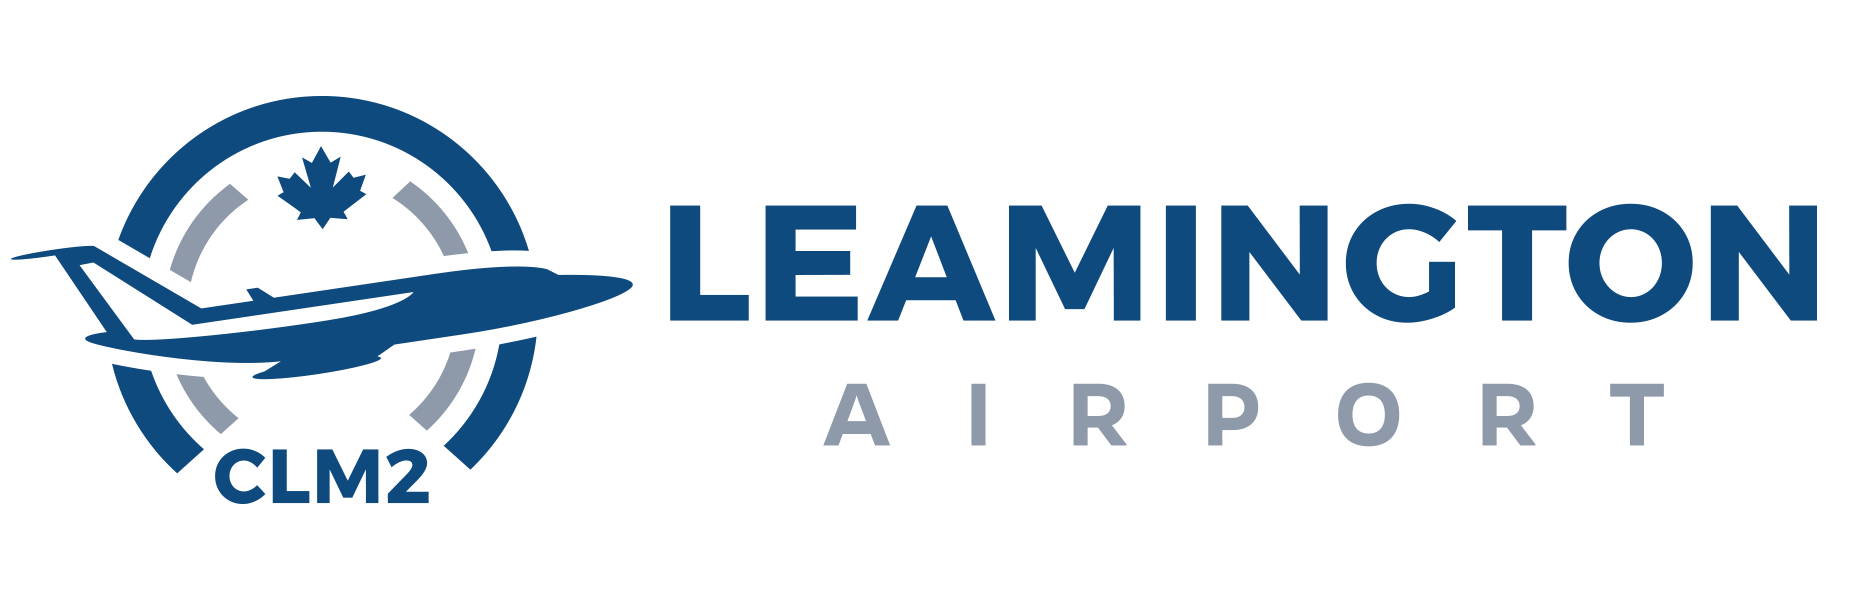 Leamington Airport CLM2